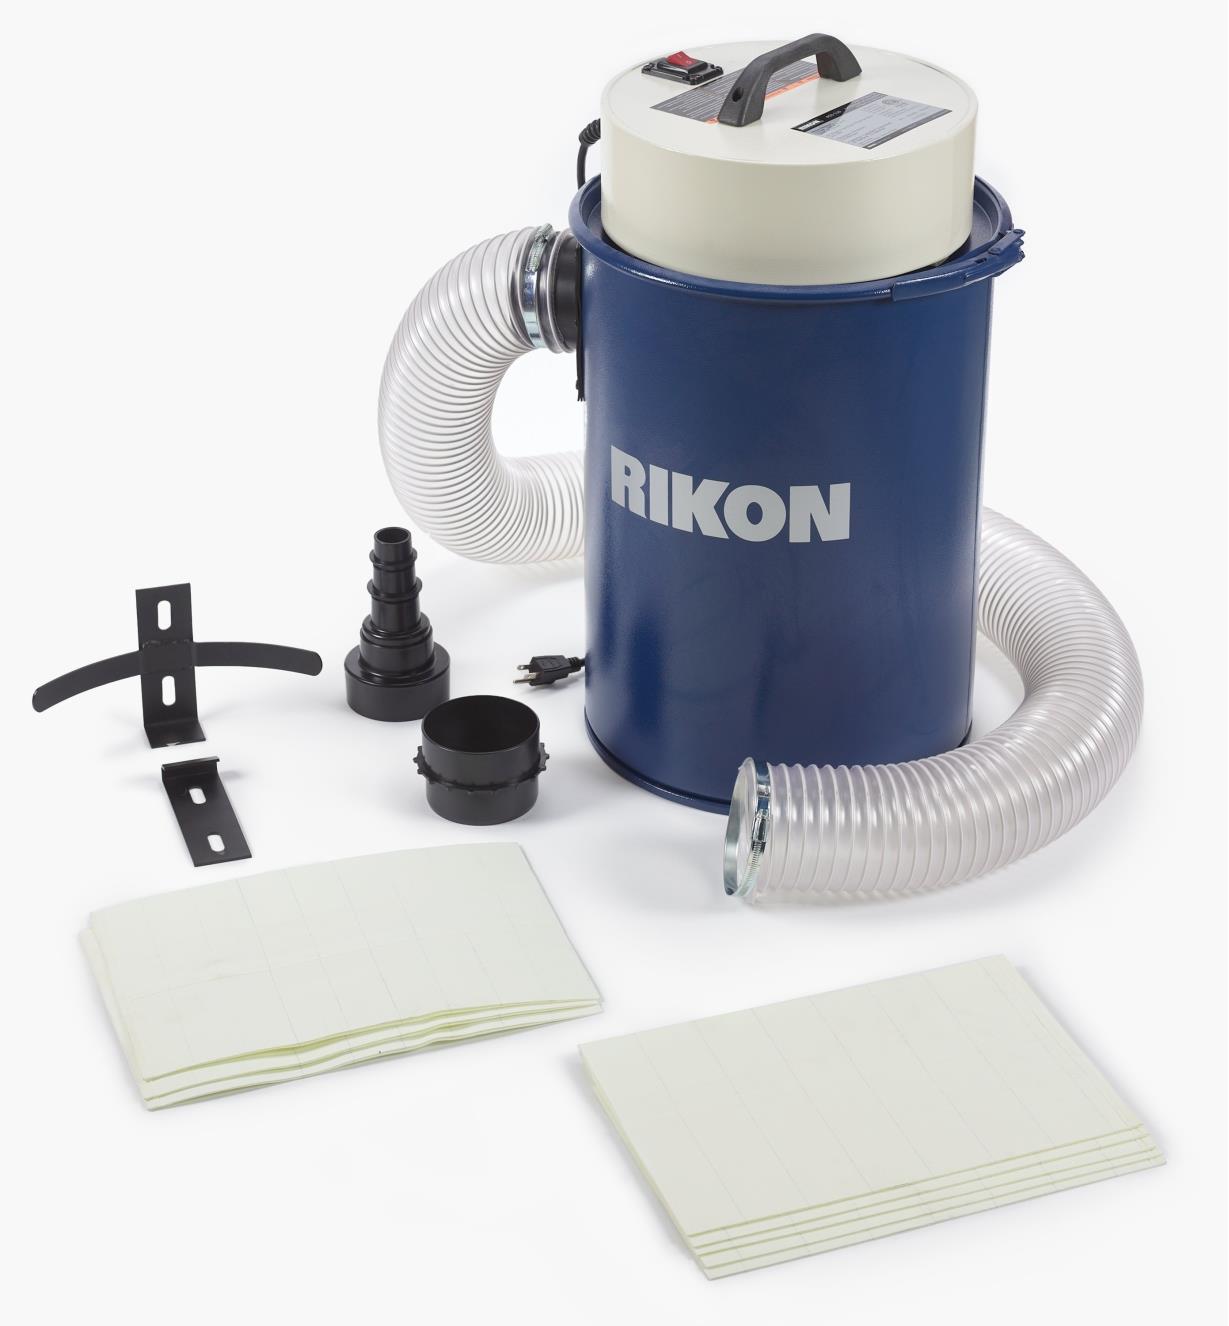 03J7454 - Rikon 12 Gallon Dust Extractor (Model 63-110) & 5 Free Pre-Filter Bags